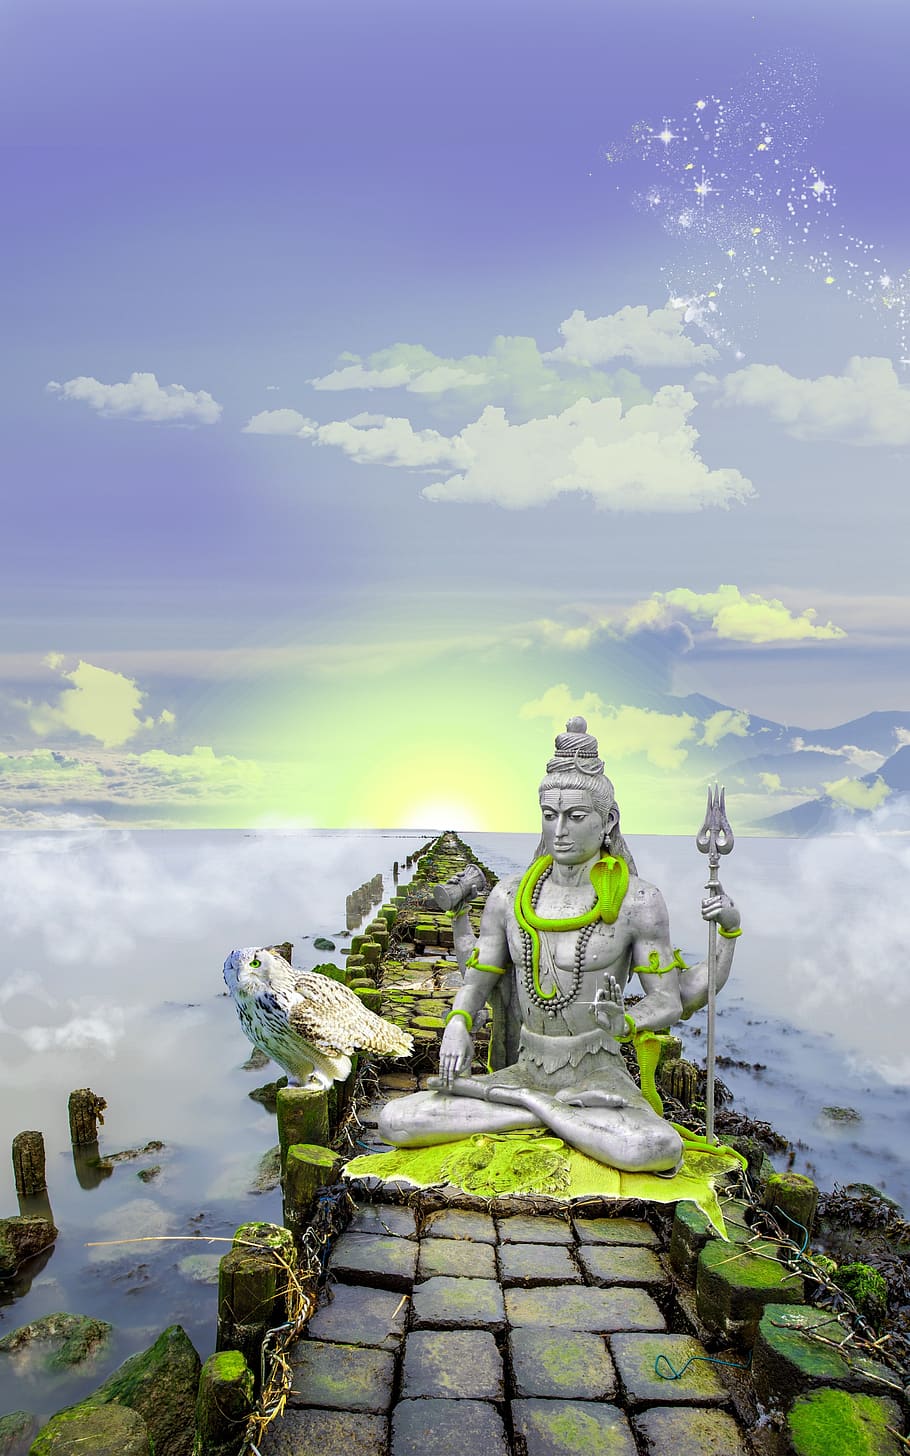 Lord Shiva 1080P, 2K, 4K, 5K HD wallpapers free download | Wallpaper Flare